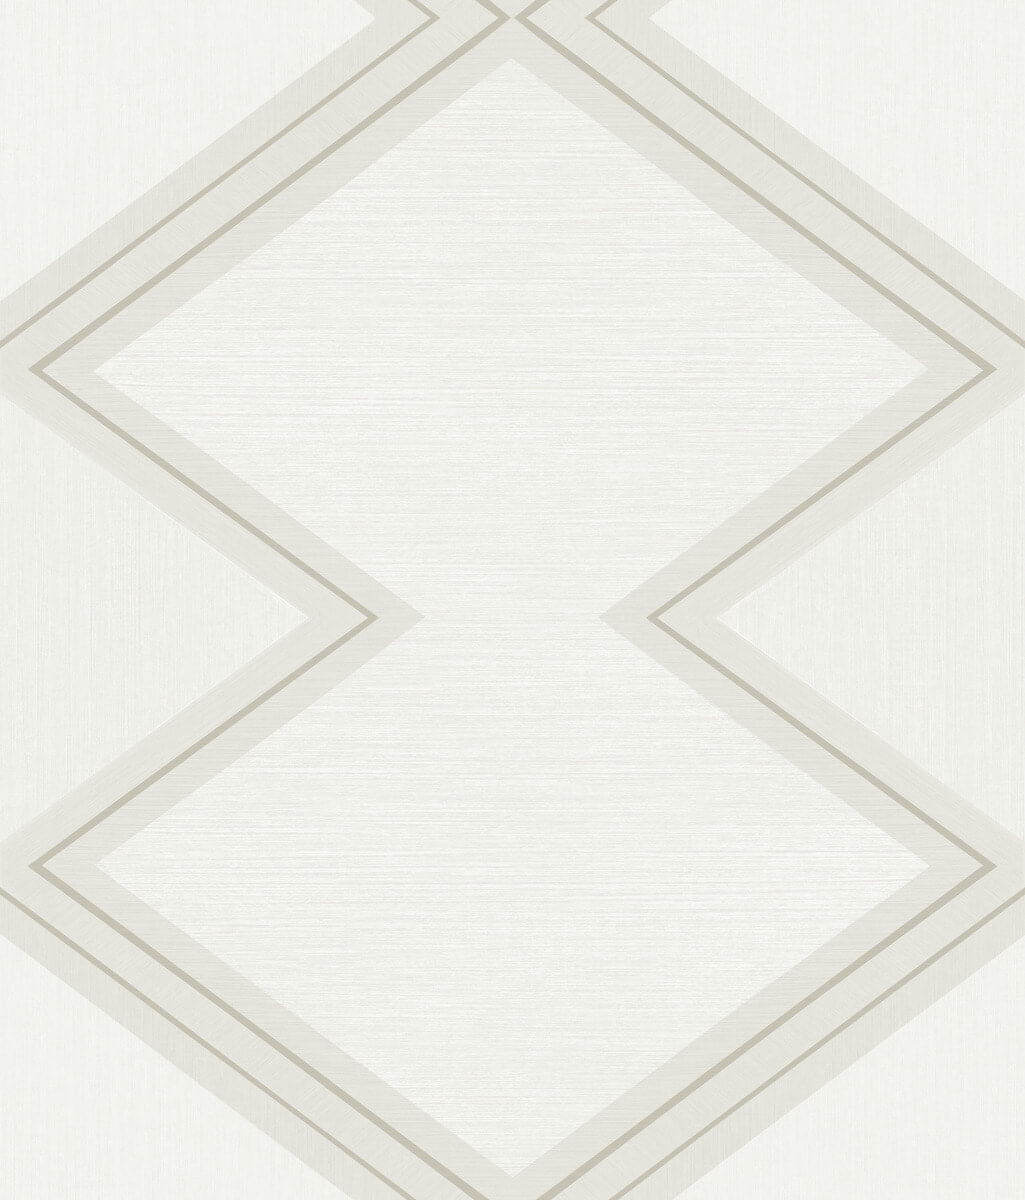 Black & White Resource Library Diamond Twist Wallpaper - White & Cream